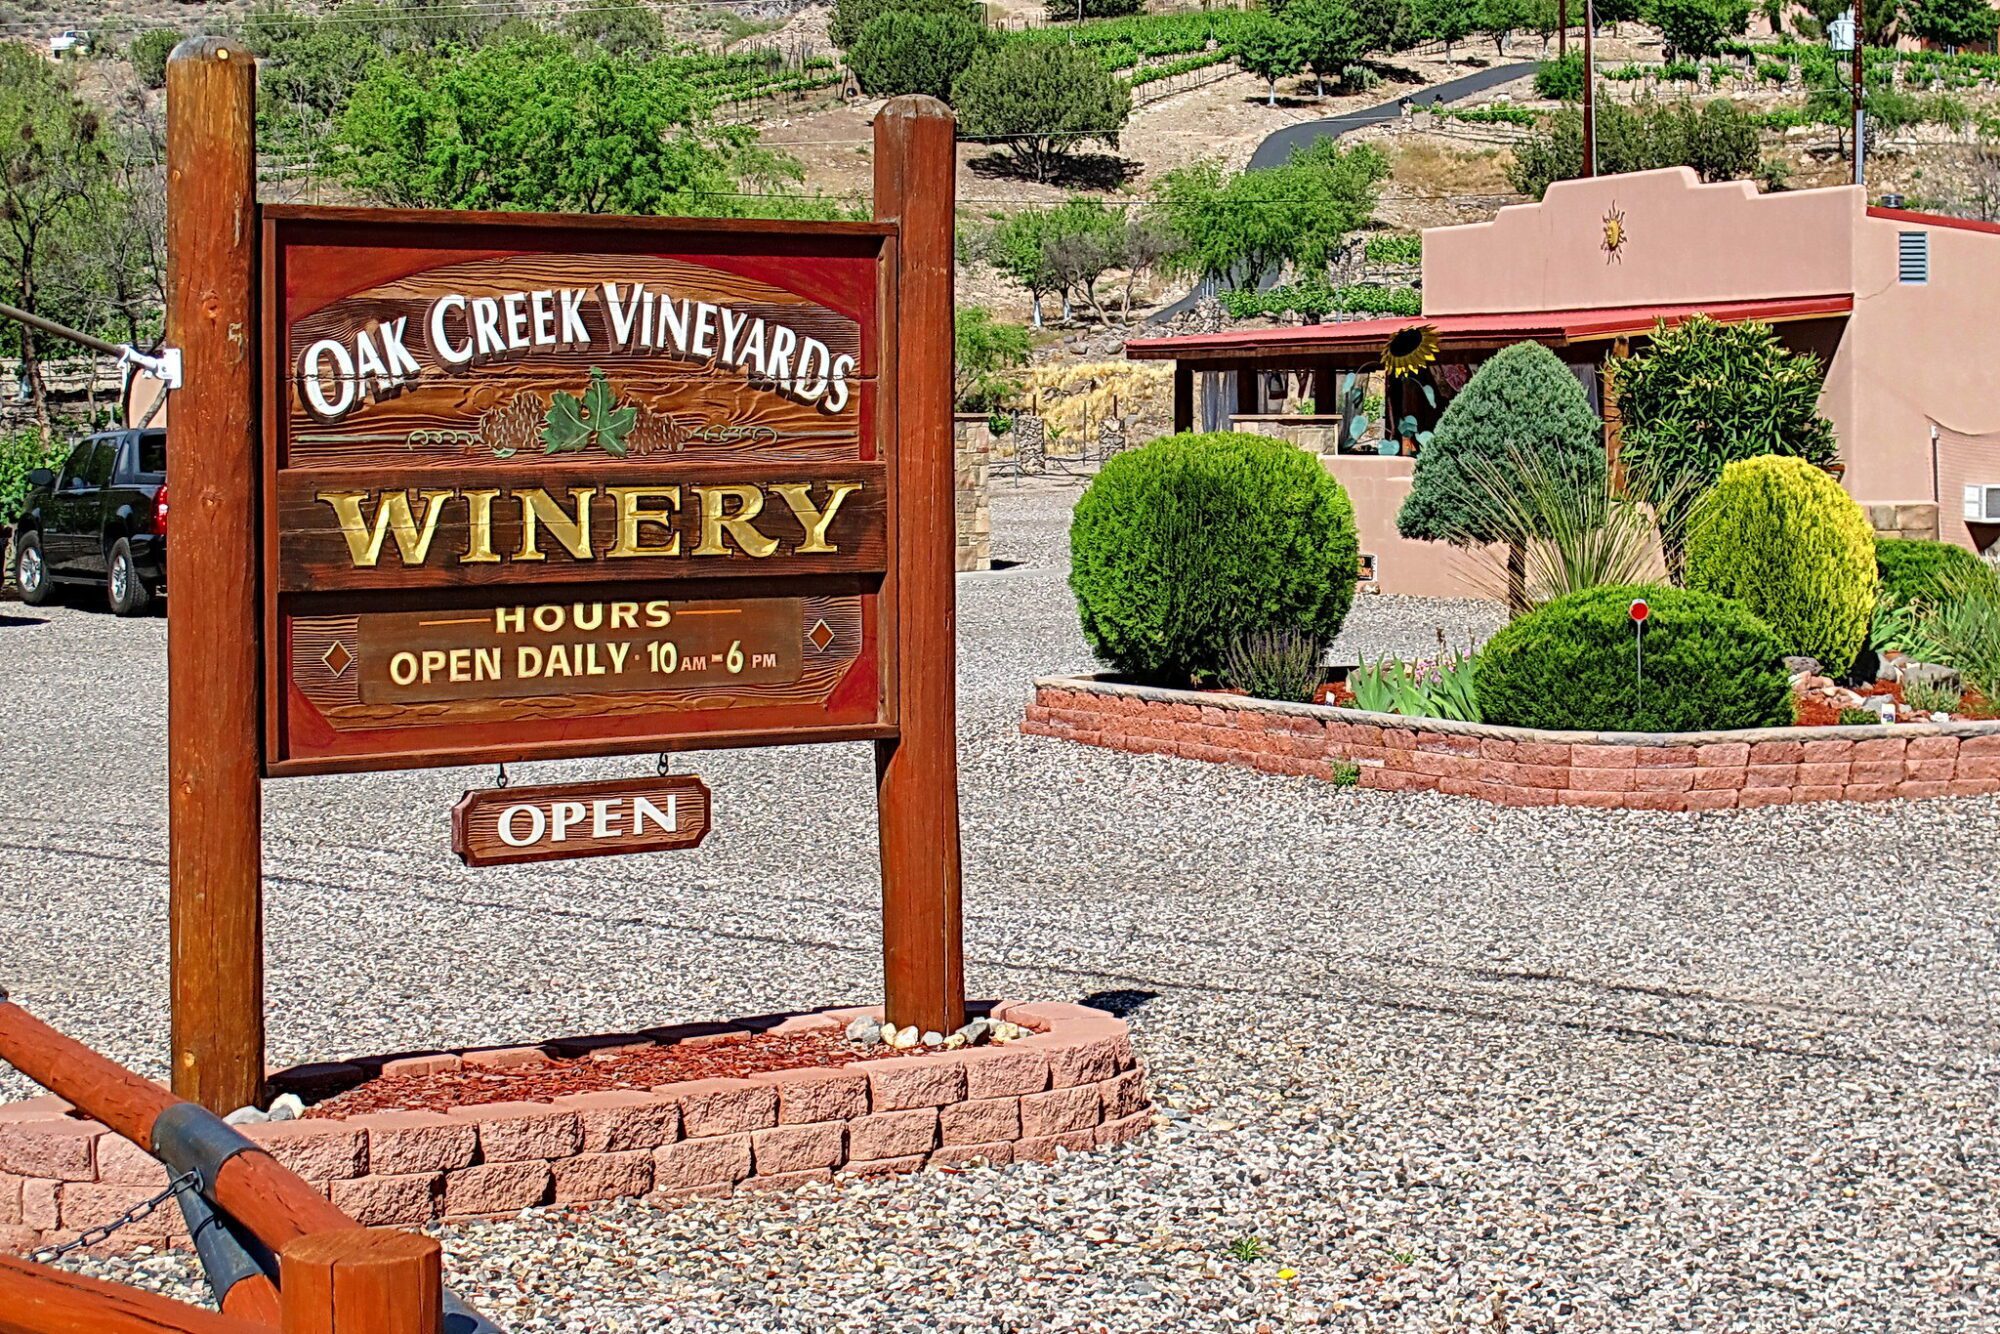 Oak Creek Vineyards sign and building in Oak Creek, AZ on the Verde Valley Wine Trail.